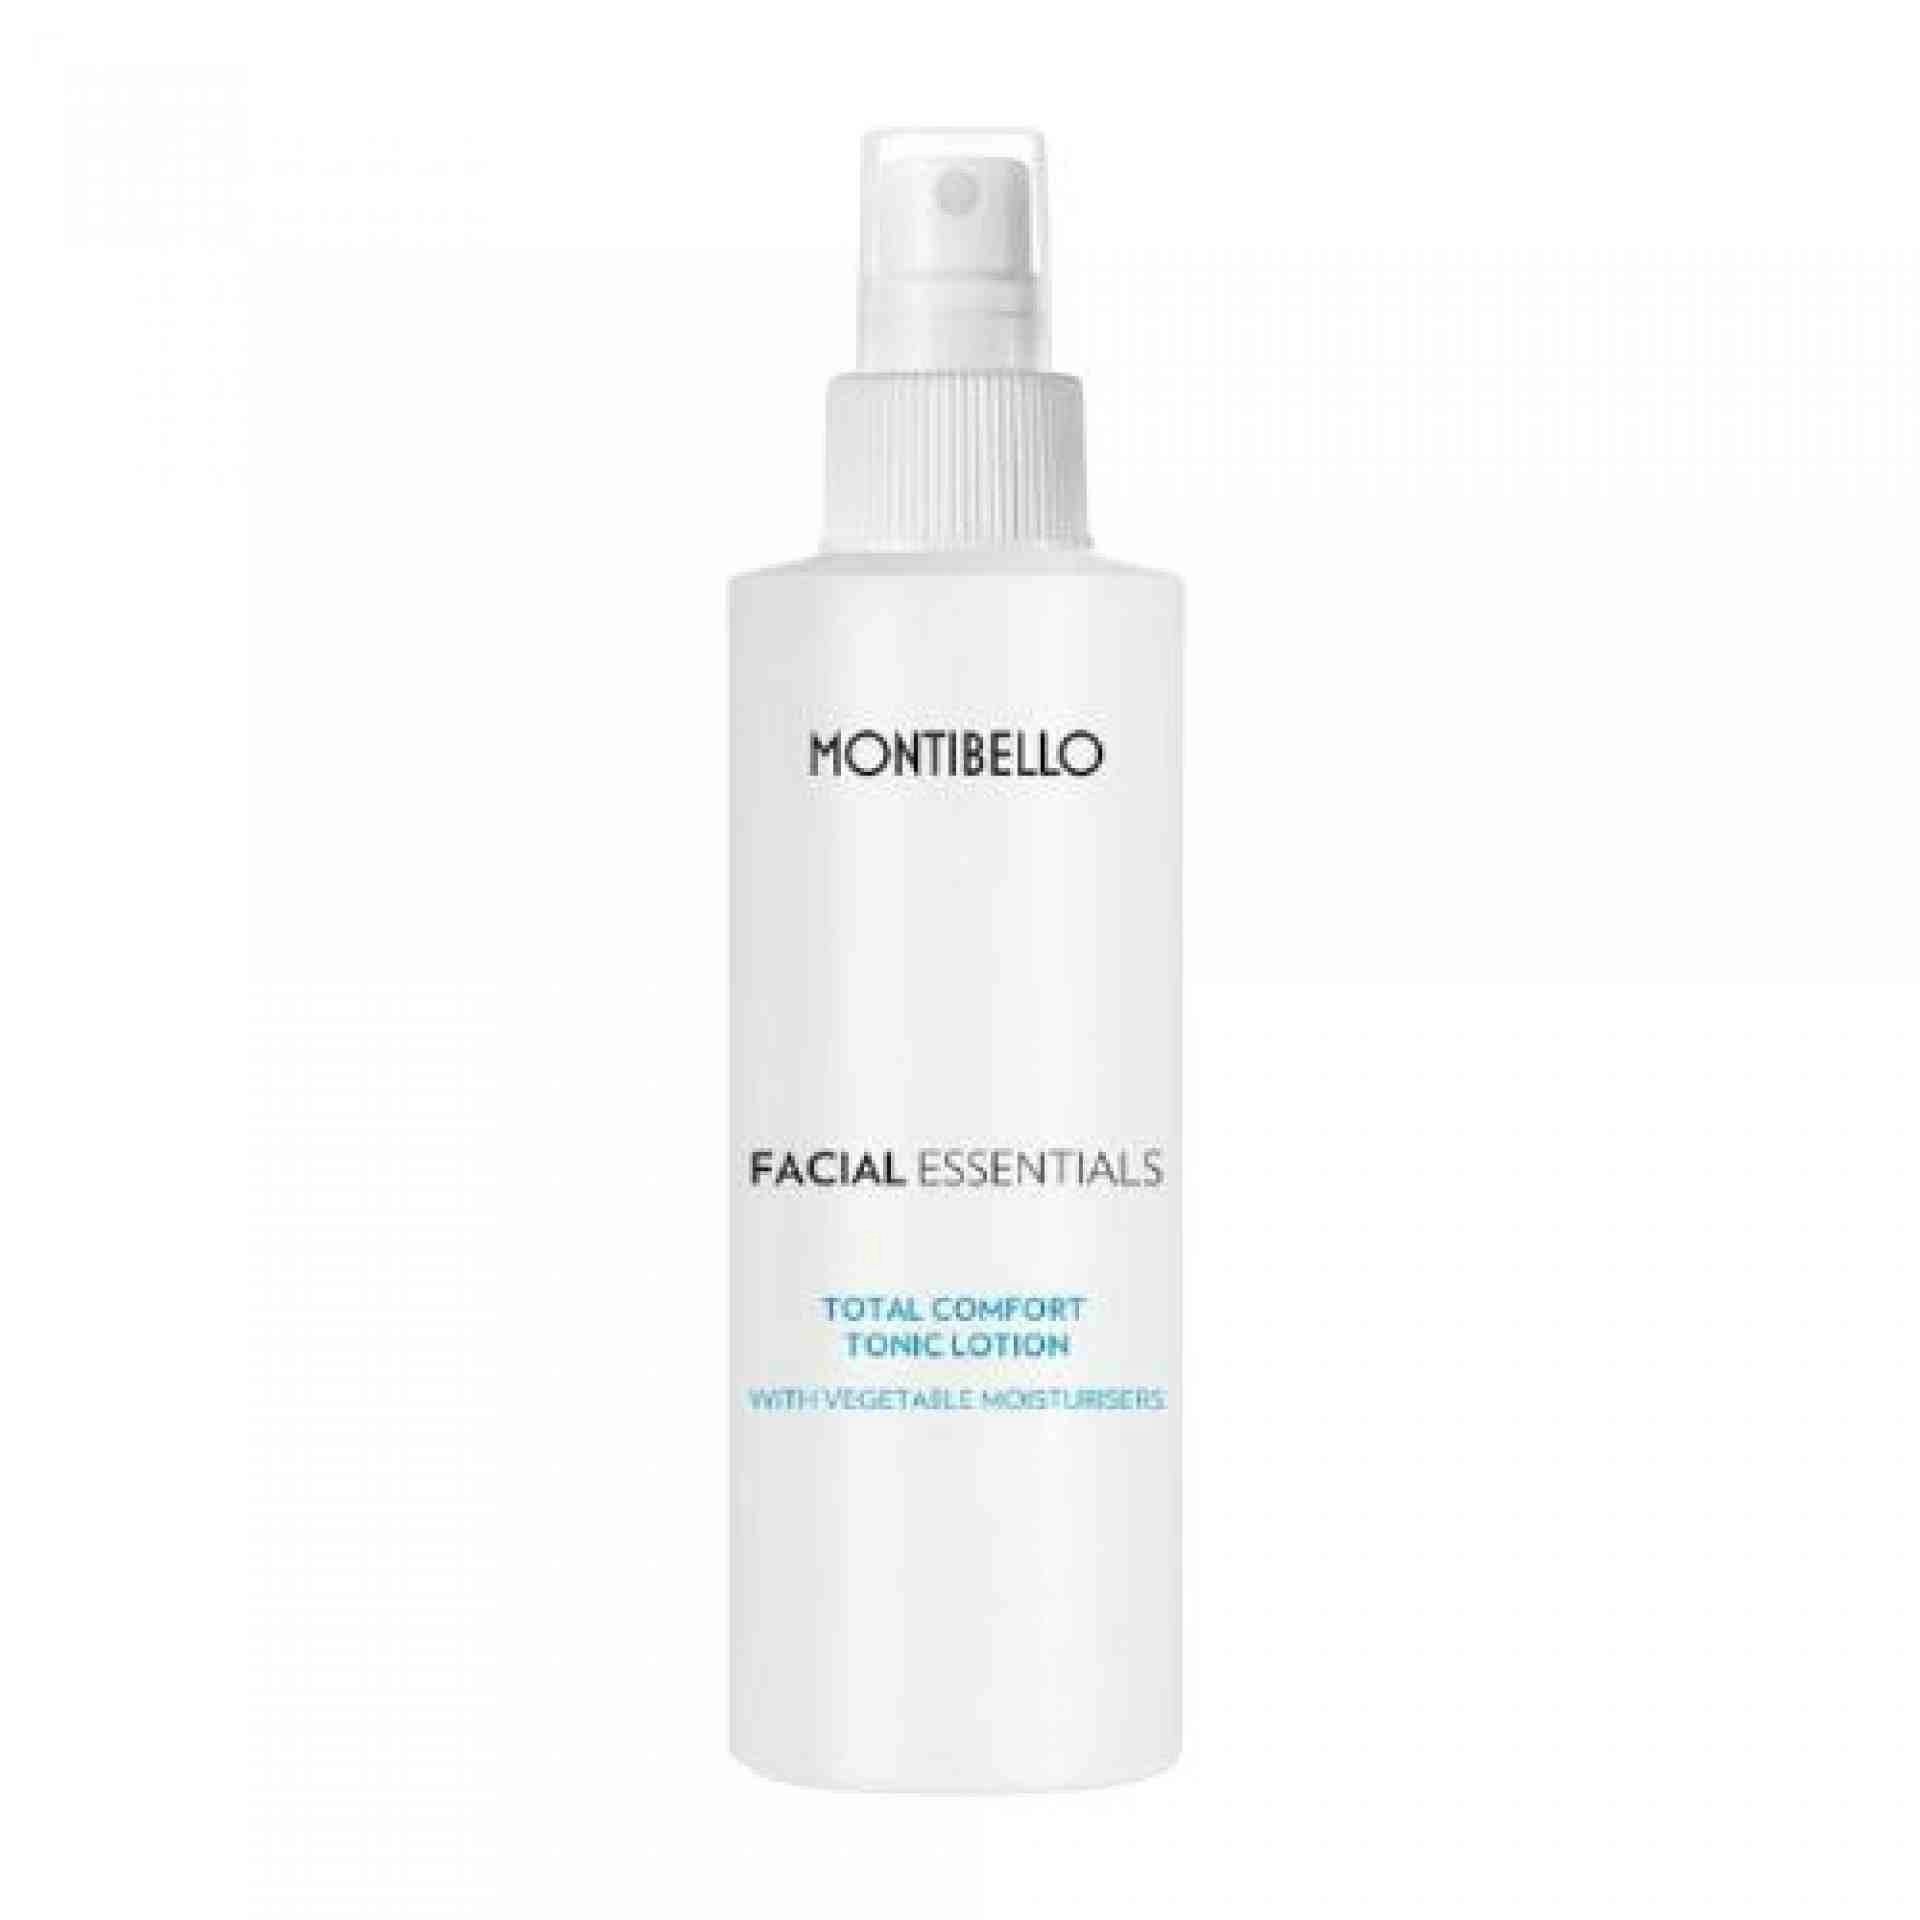 Total Comfort Tonic Lotion | Loción tónica revitalizante 200ml - Facial Essentials - Montibello ®